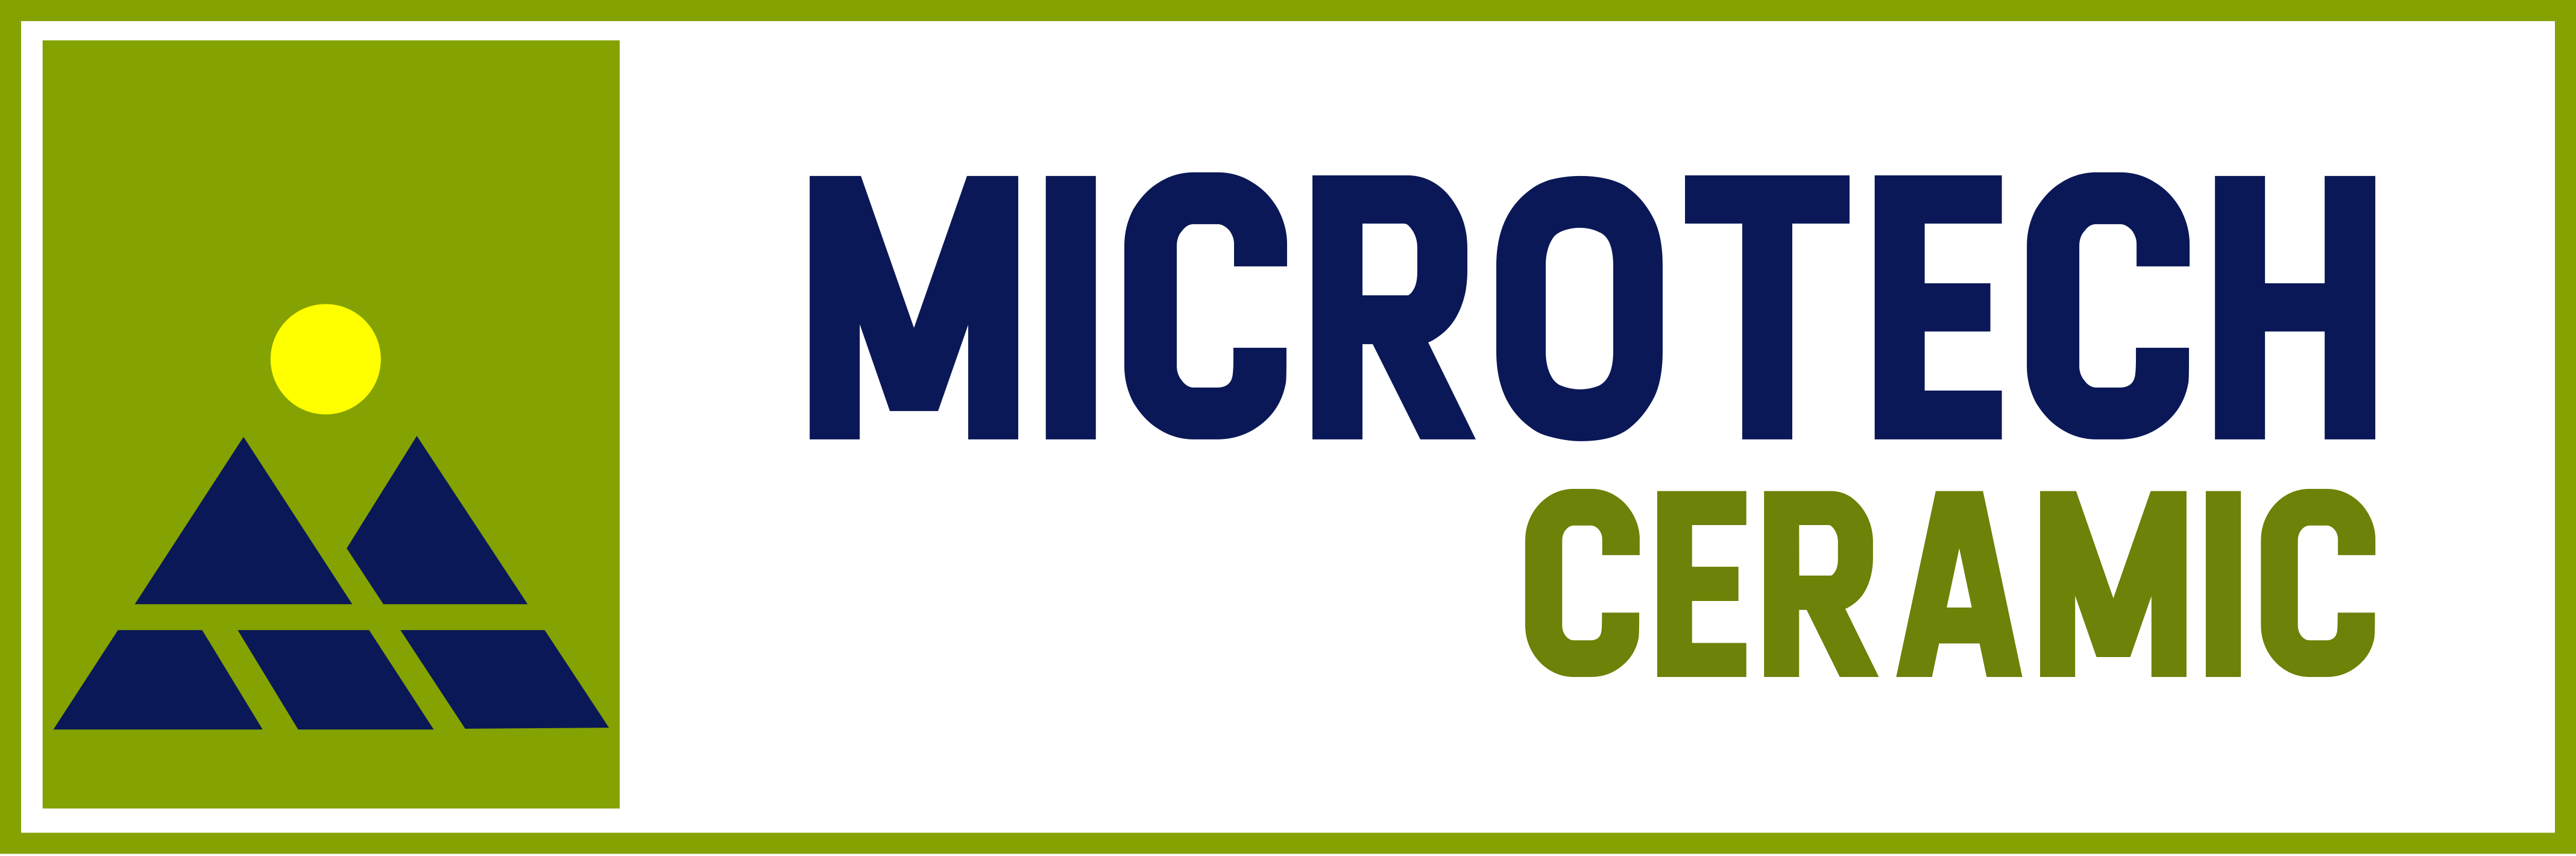 MIRCOTECH CERAMIC : Brand Short Description Type Here.